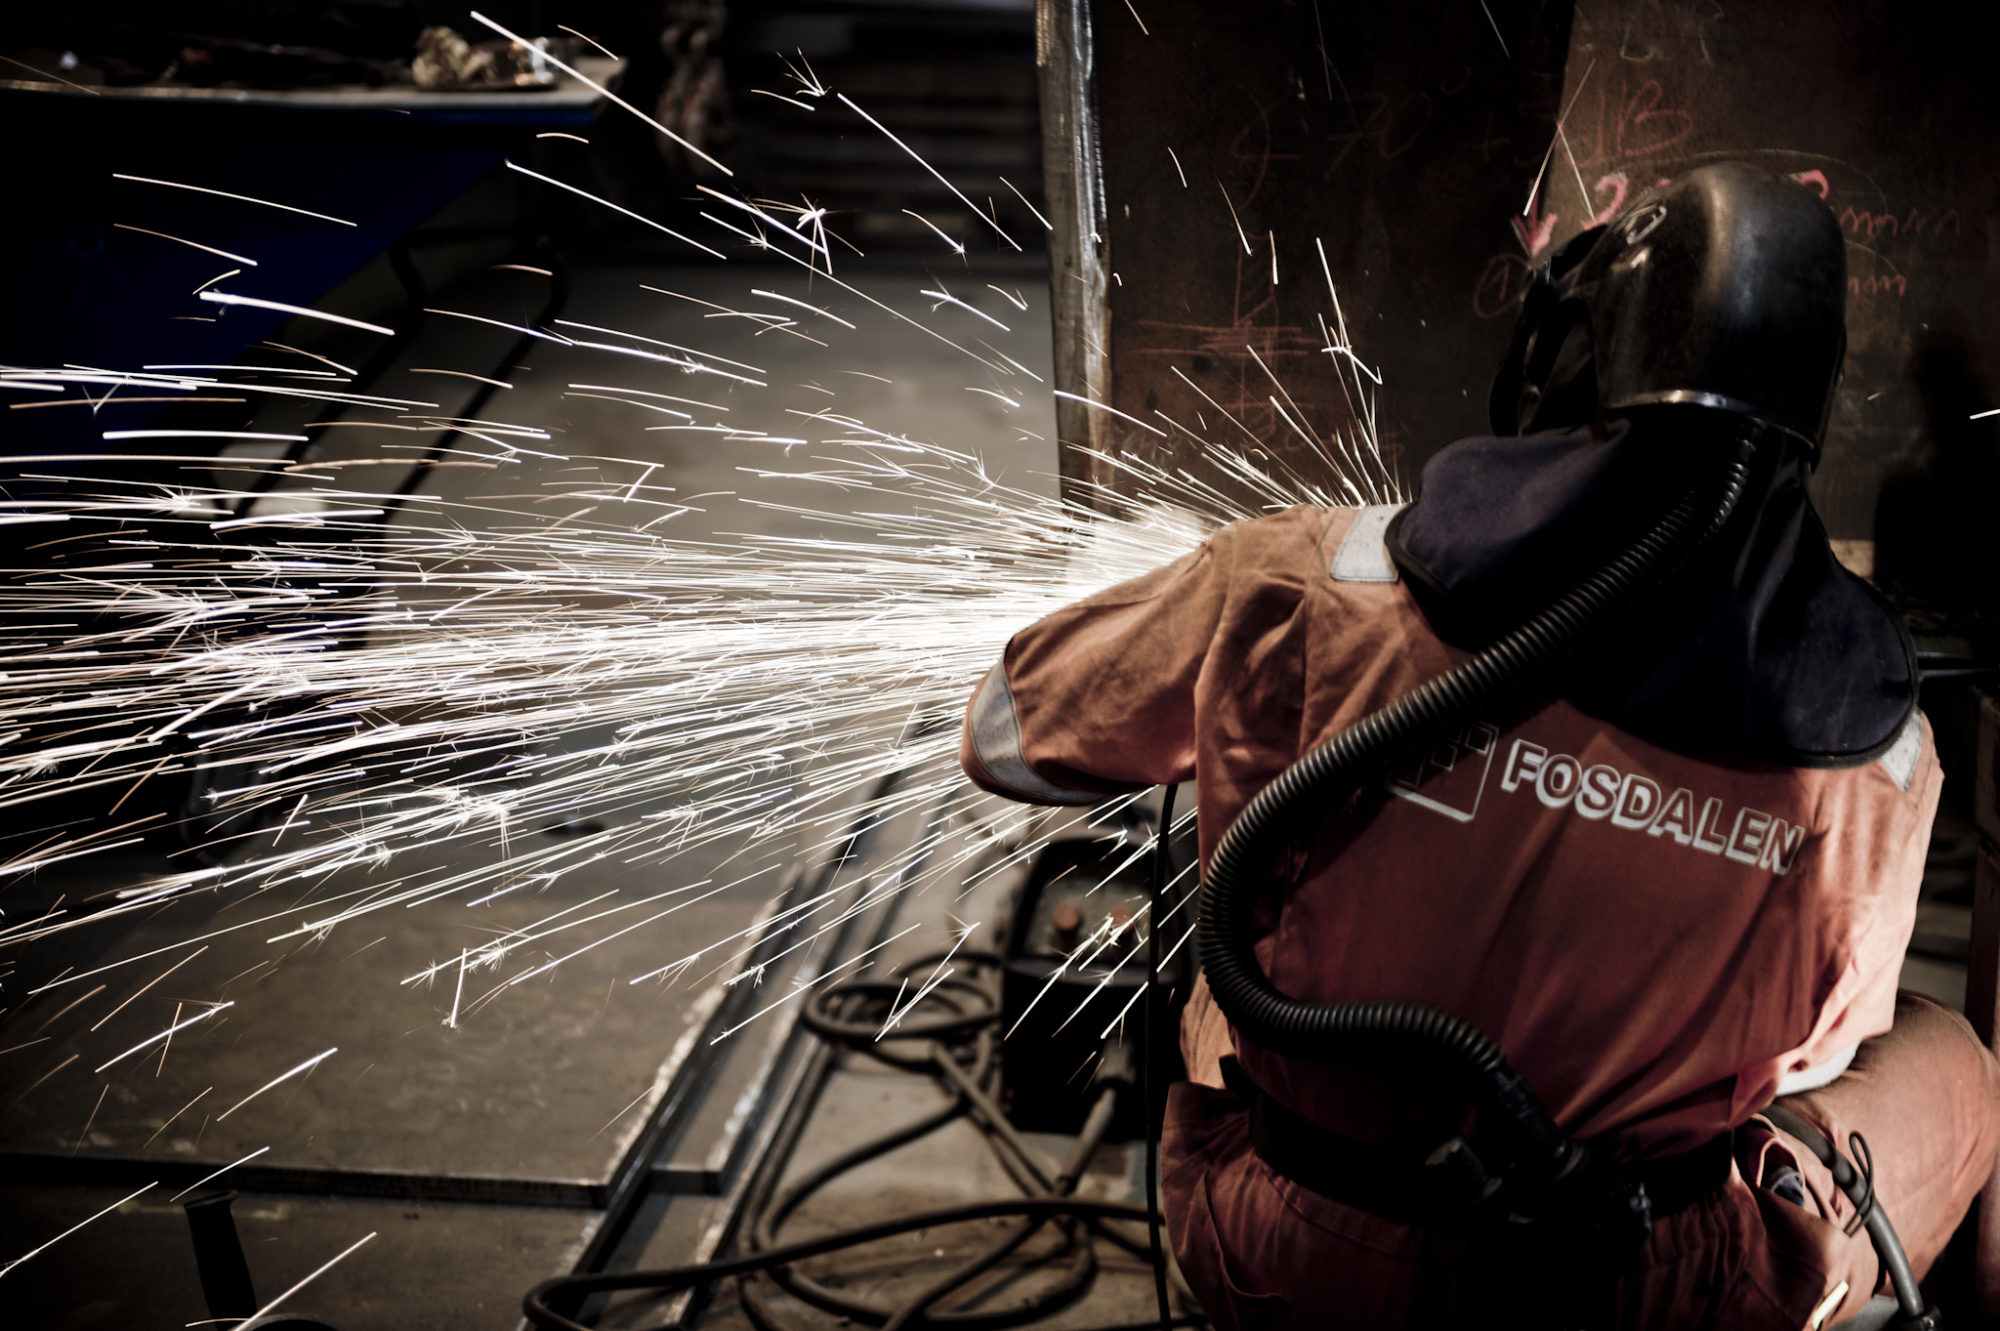 Fosdalen production worker welding